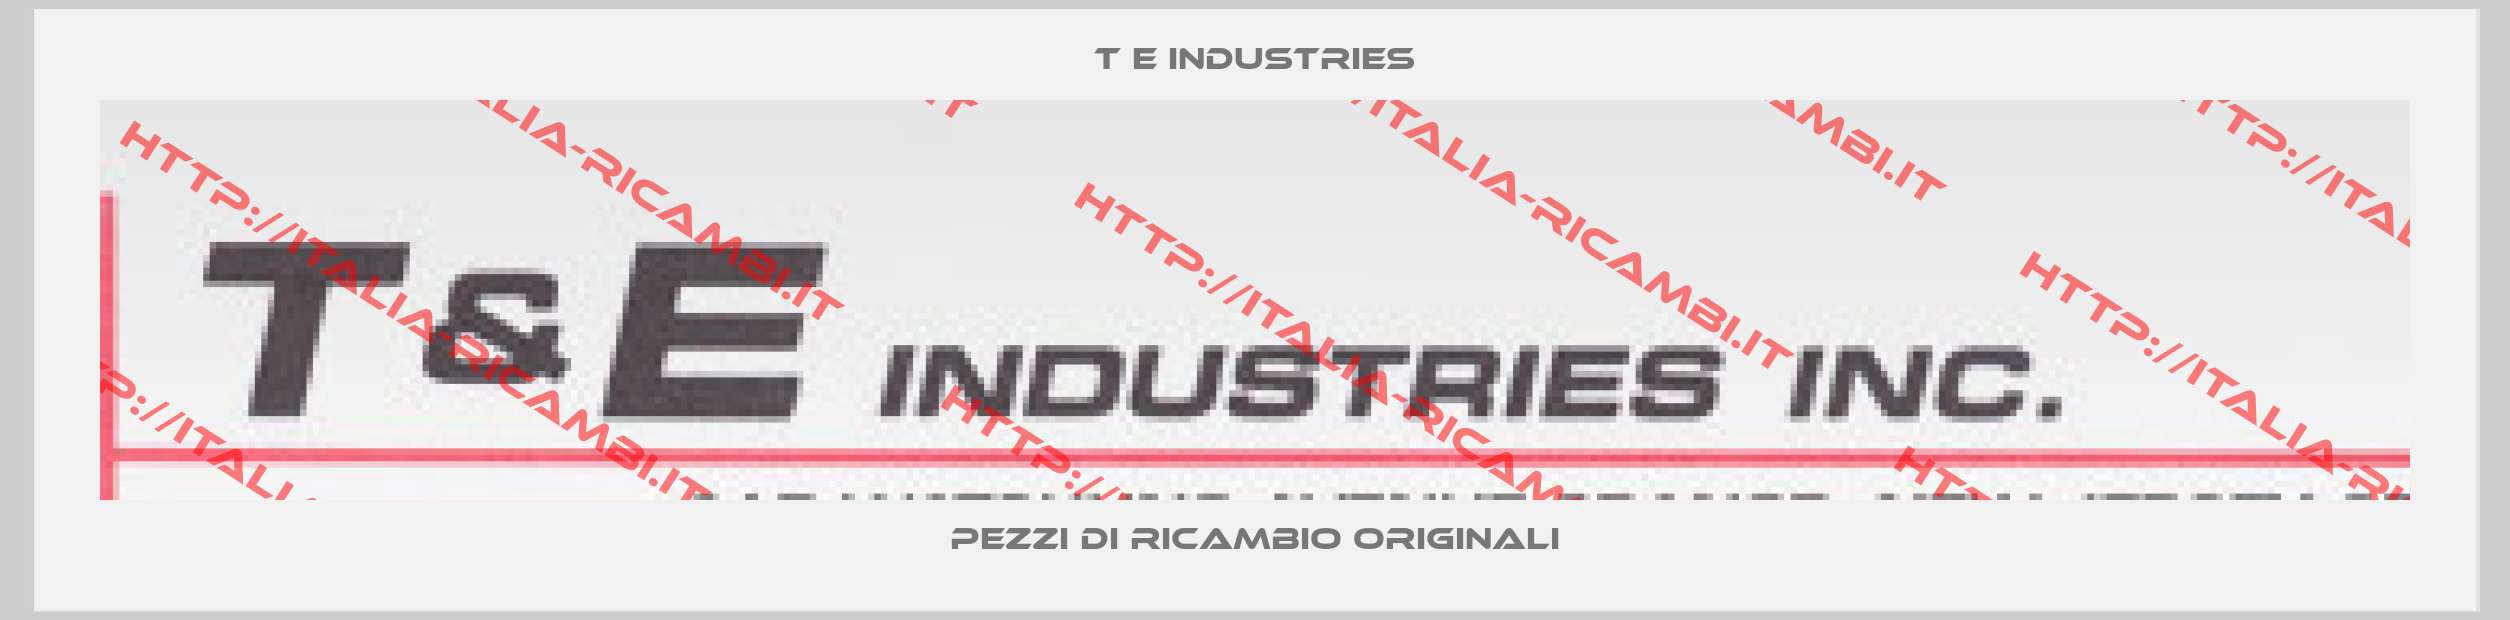 T E industries